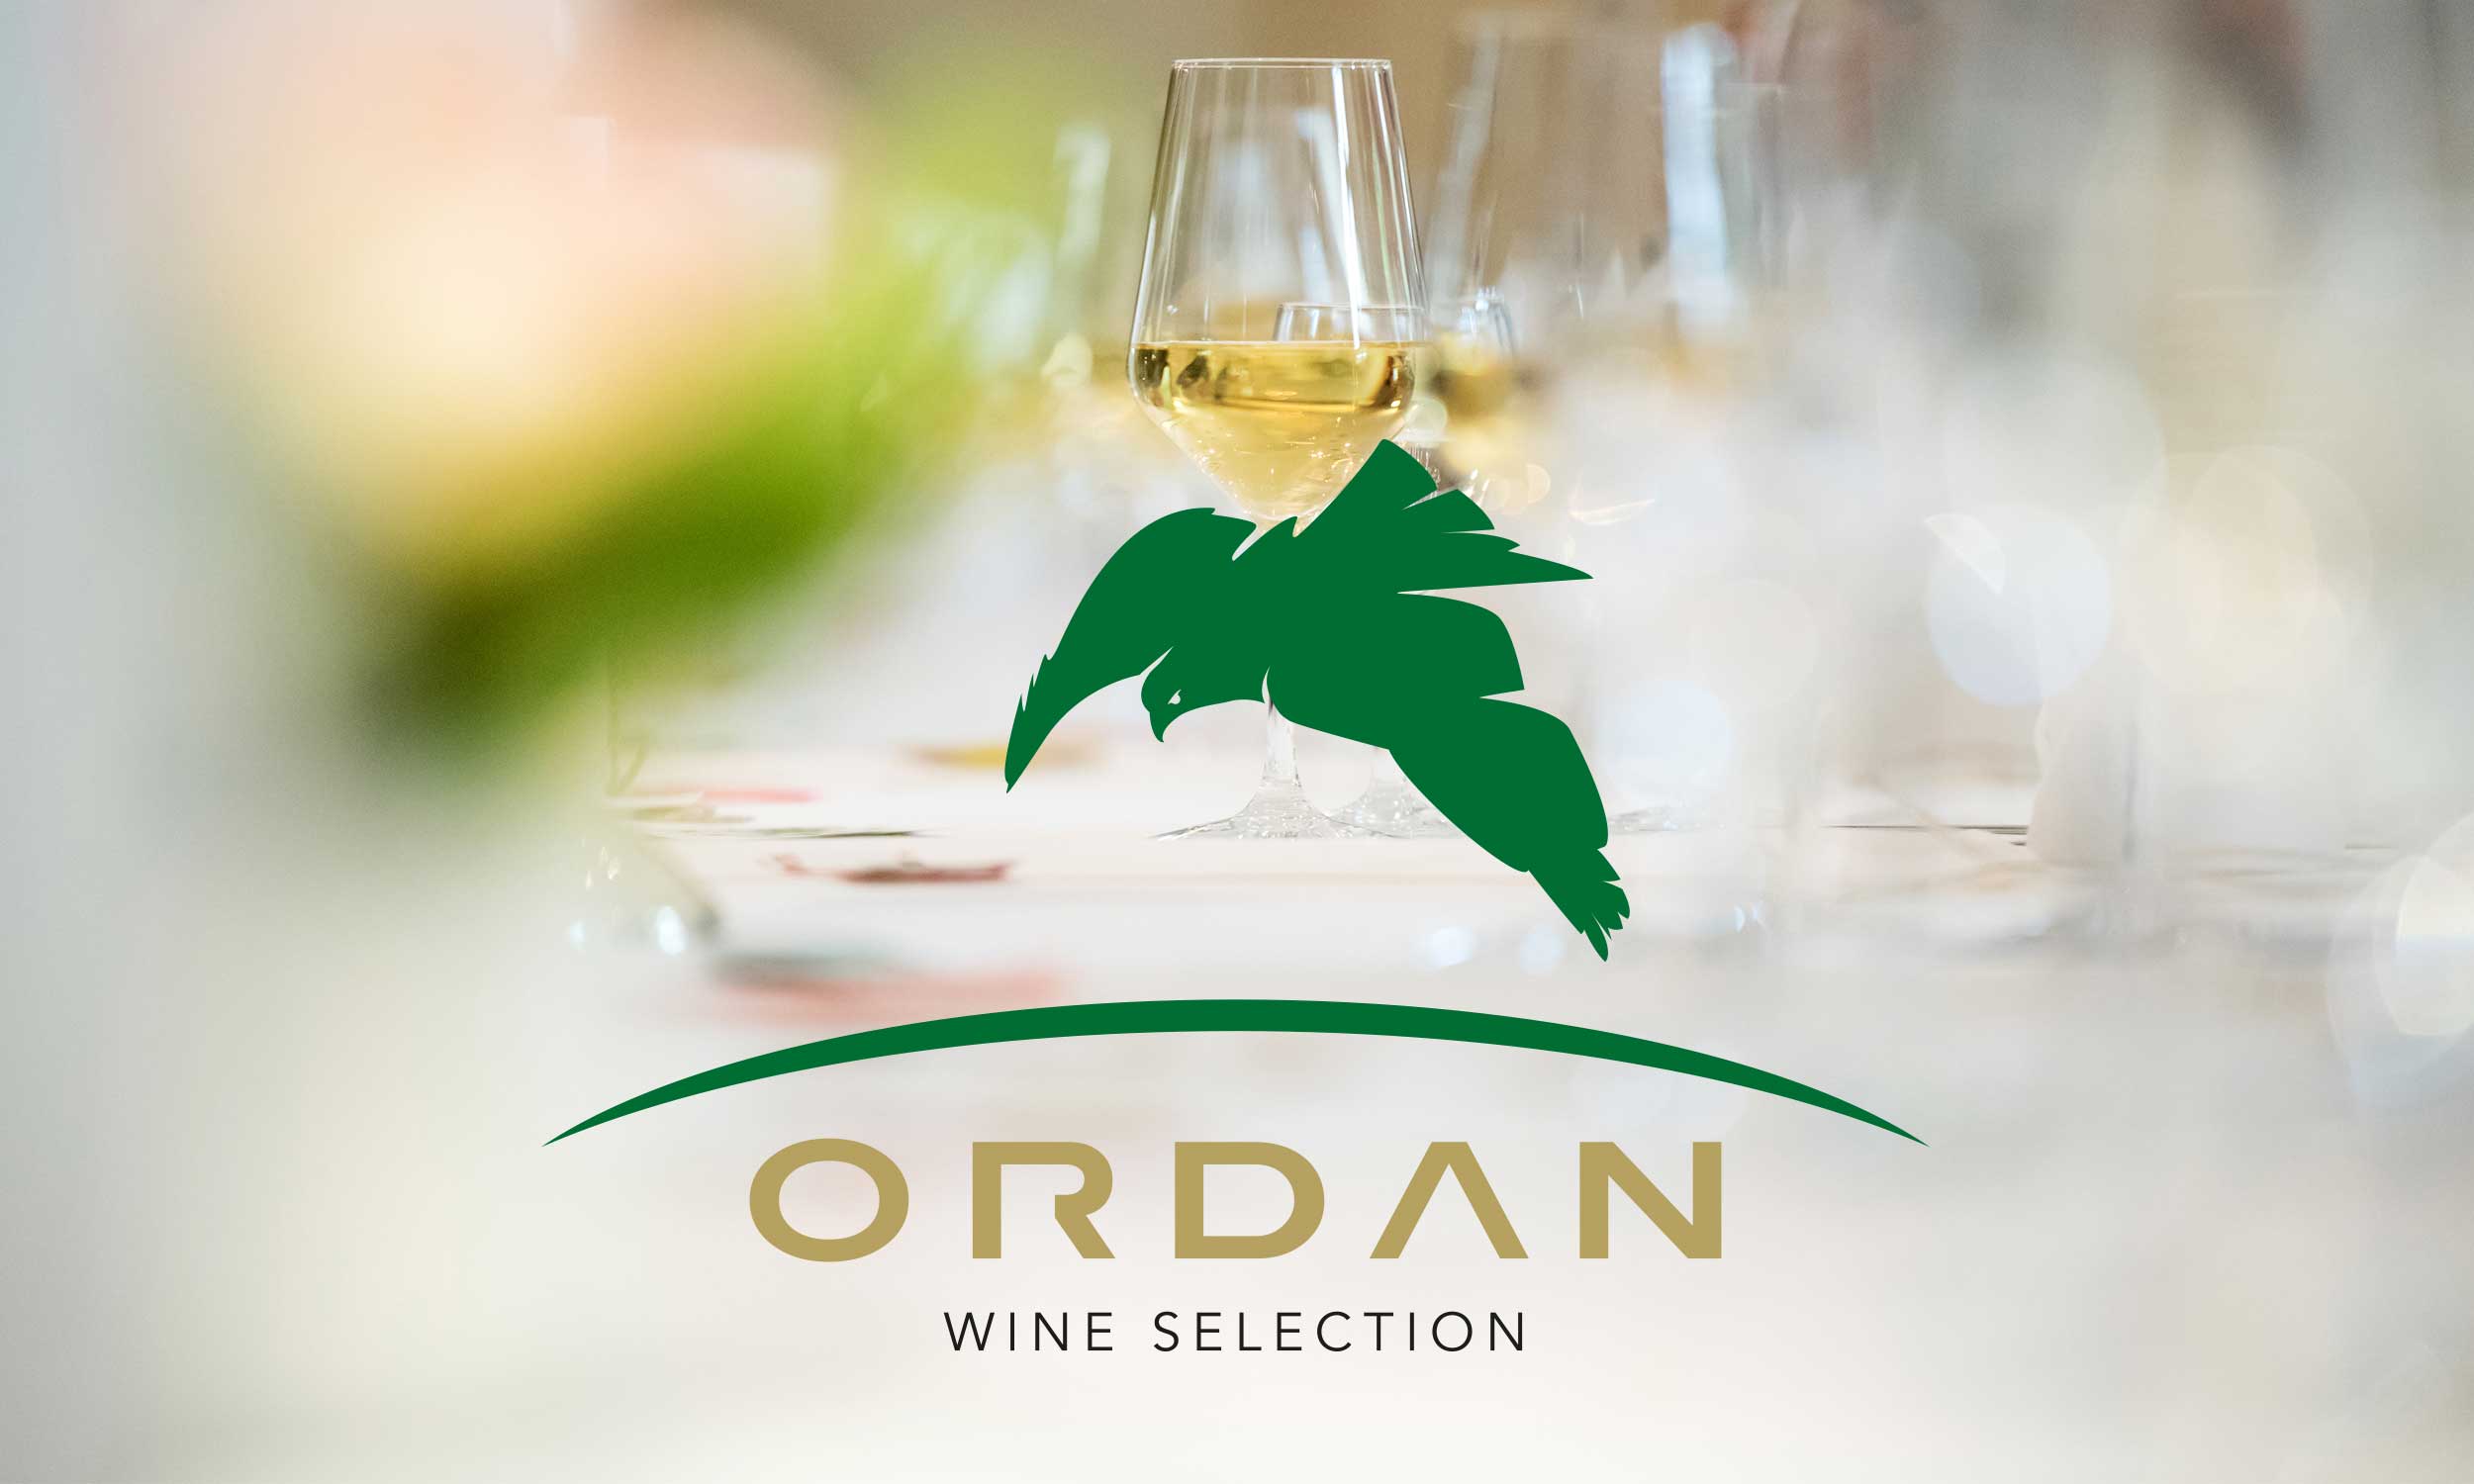 Ordan wine selection